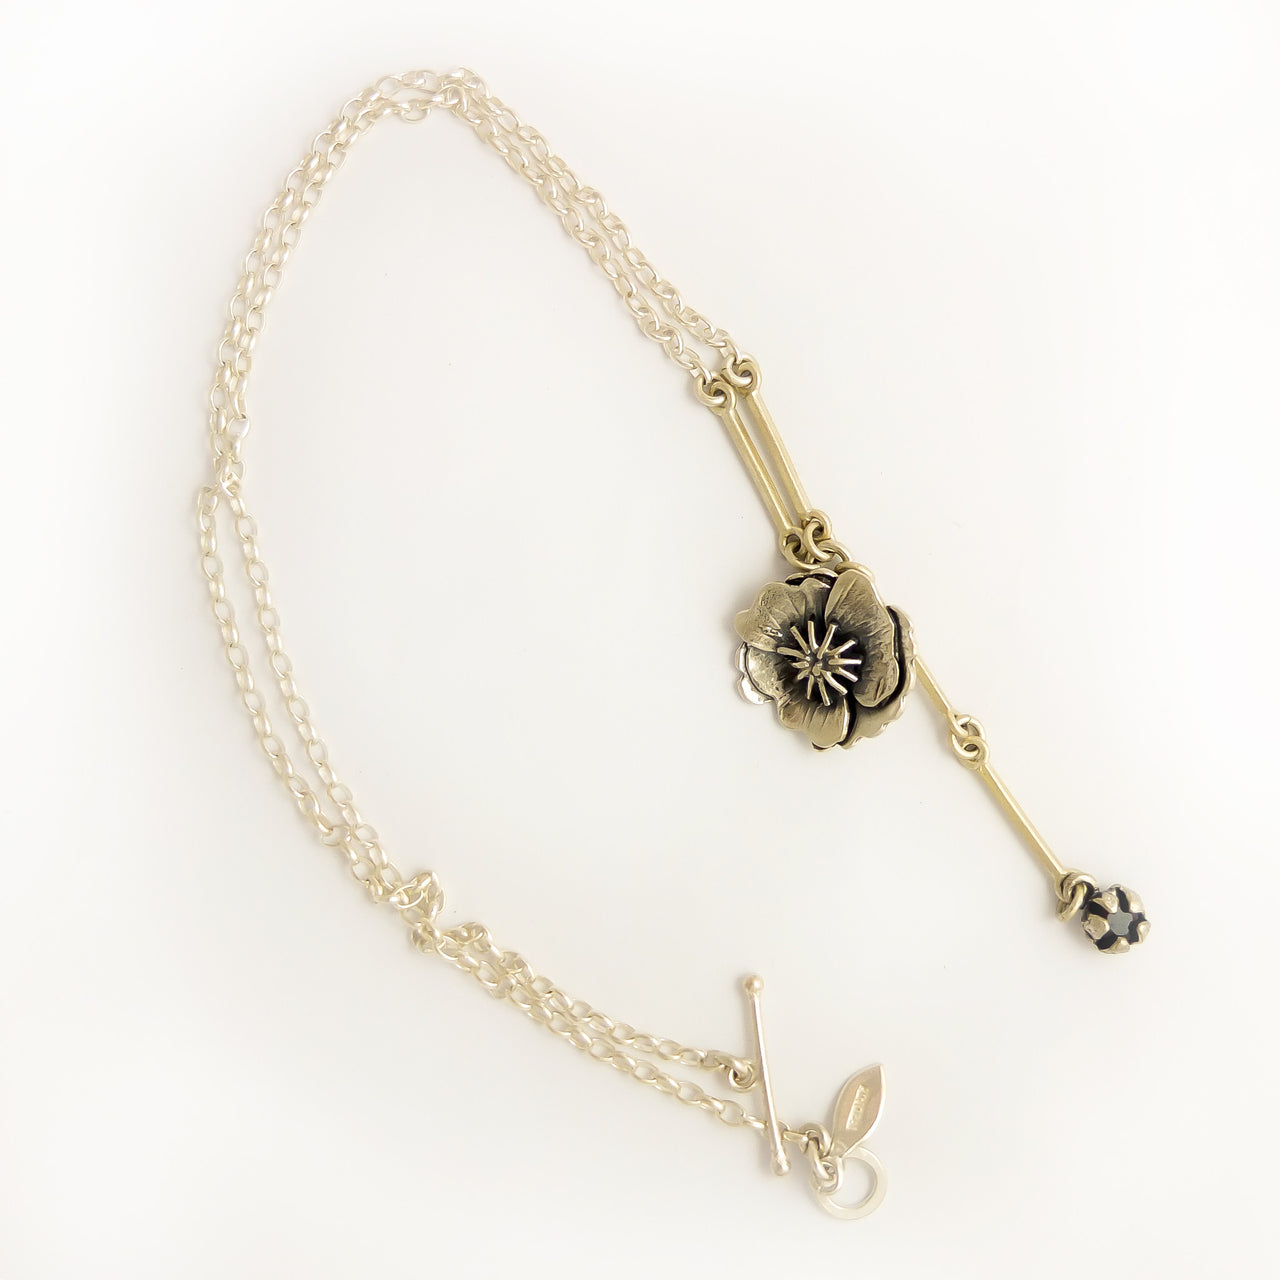 Poppy Flower with Trail Necklace | nz jewellery | Redmanuka, silver necklace